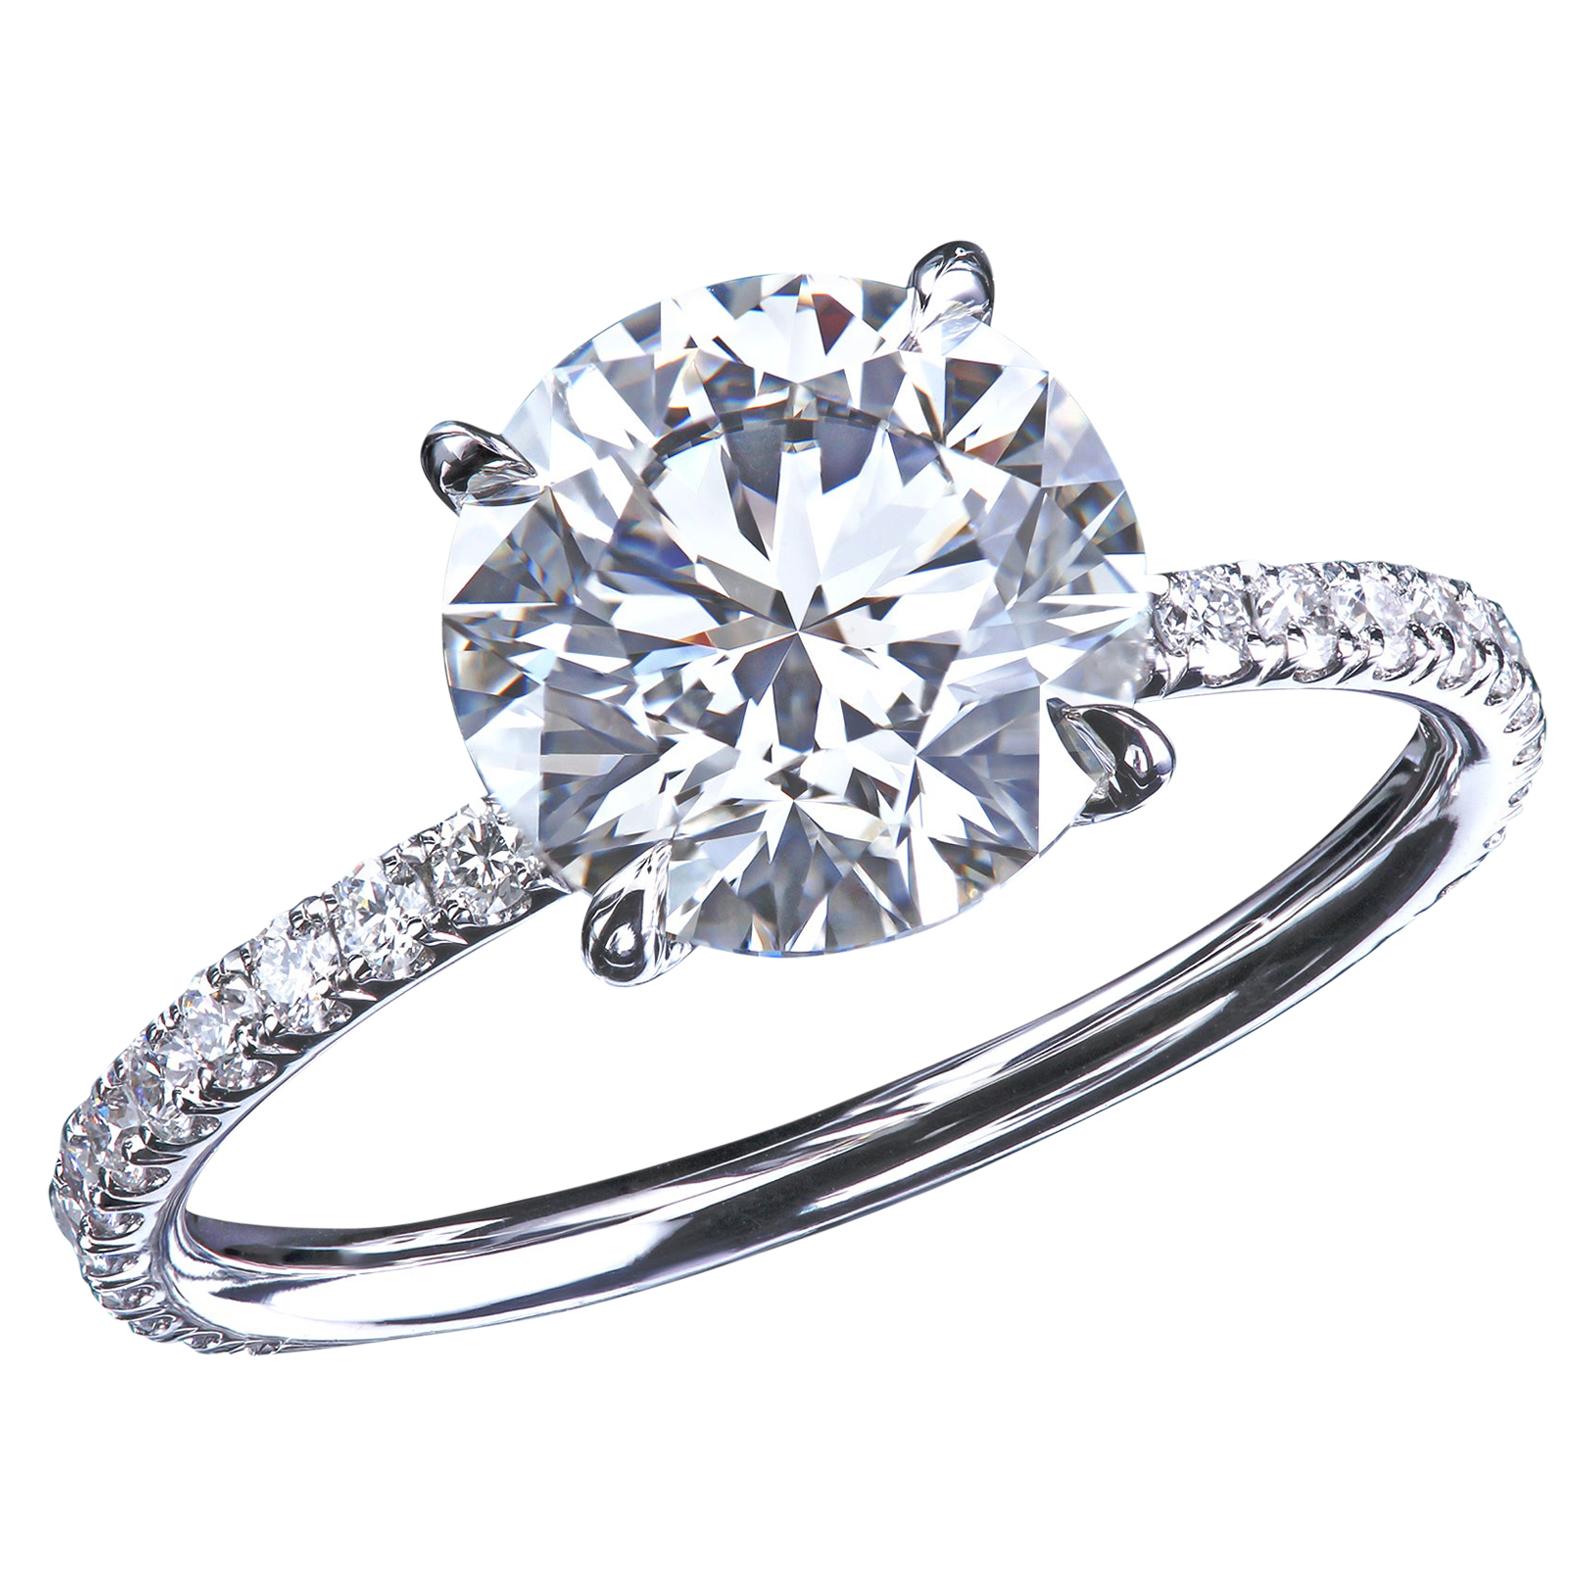 Leon Mege Handmade Platinum Engagement Ring with Round Diamond